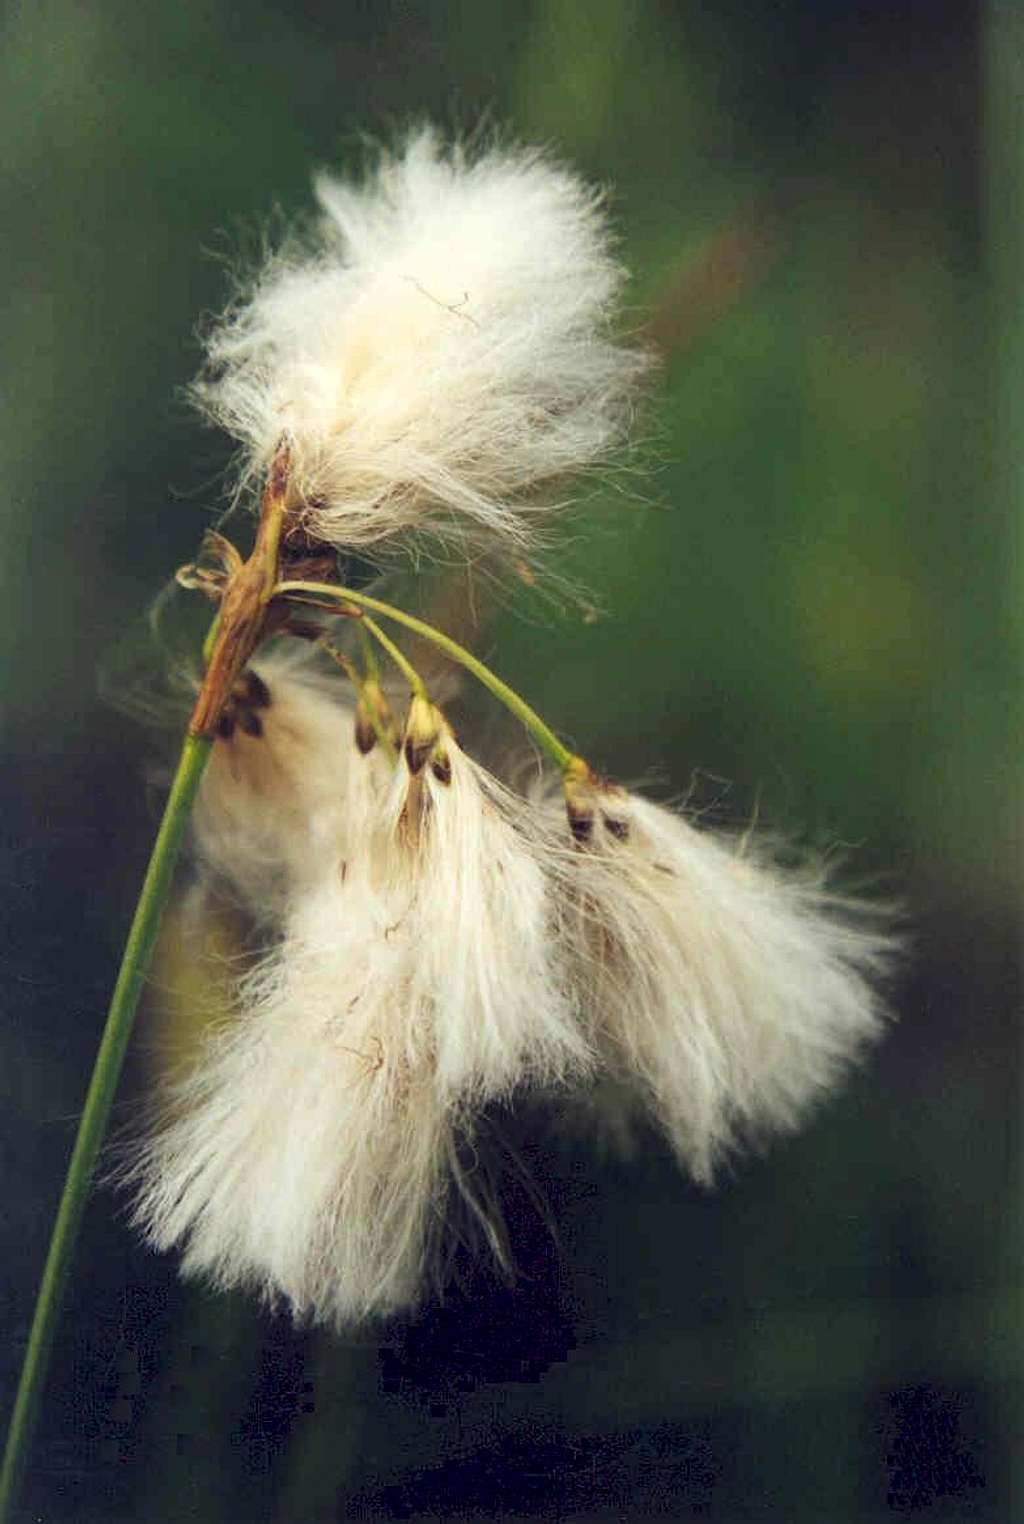 Slender Cotton-grass (Eriophorum gracile)